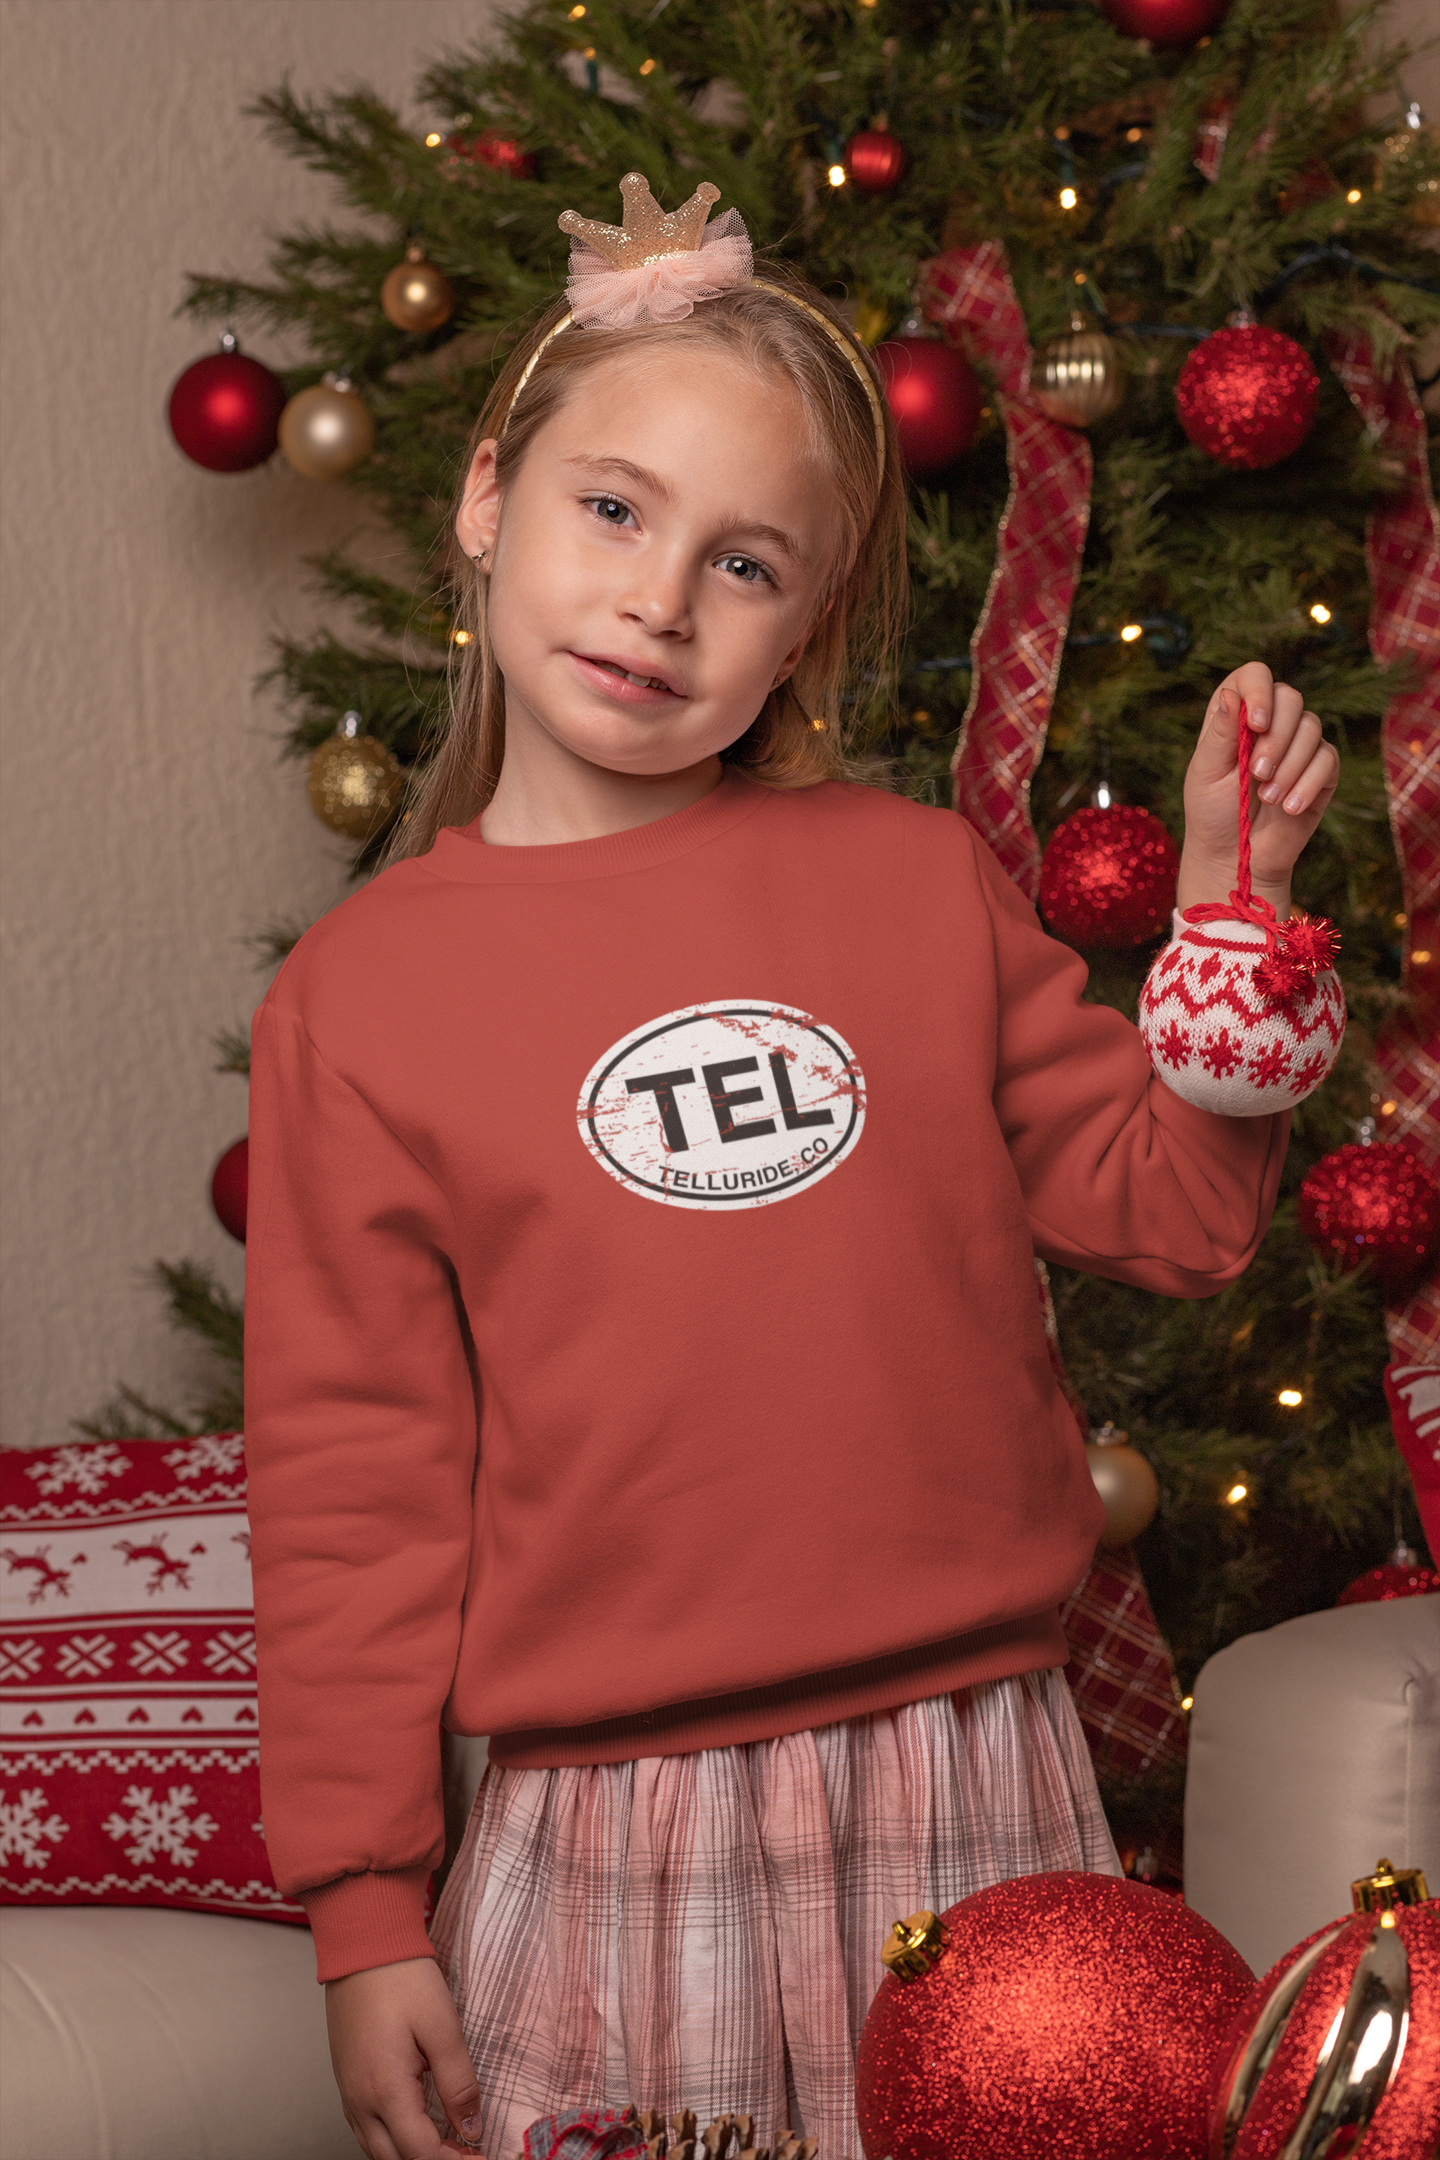 Telluride Youth Sweatshirt | Telluride Classic Oval Logo Youth Sweatshirt Souvenir Gifts - My Destination Location